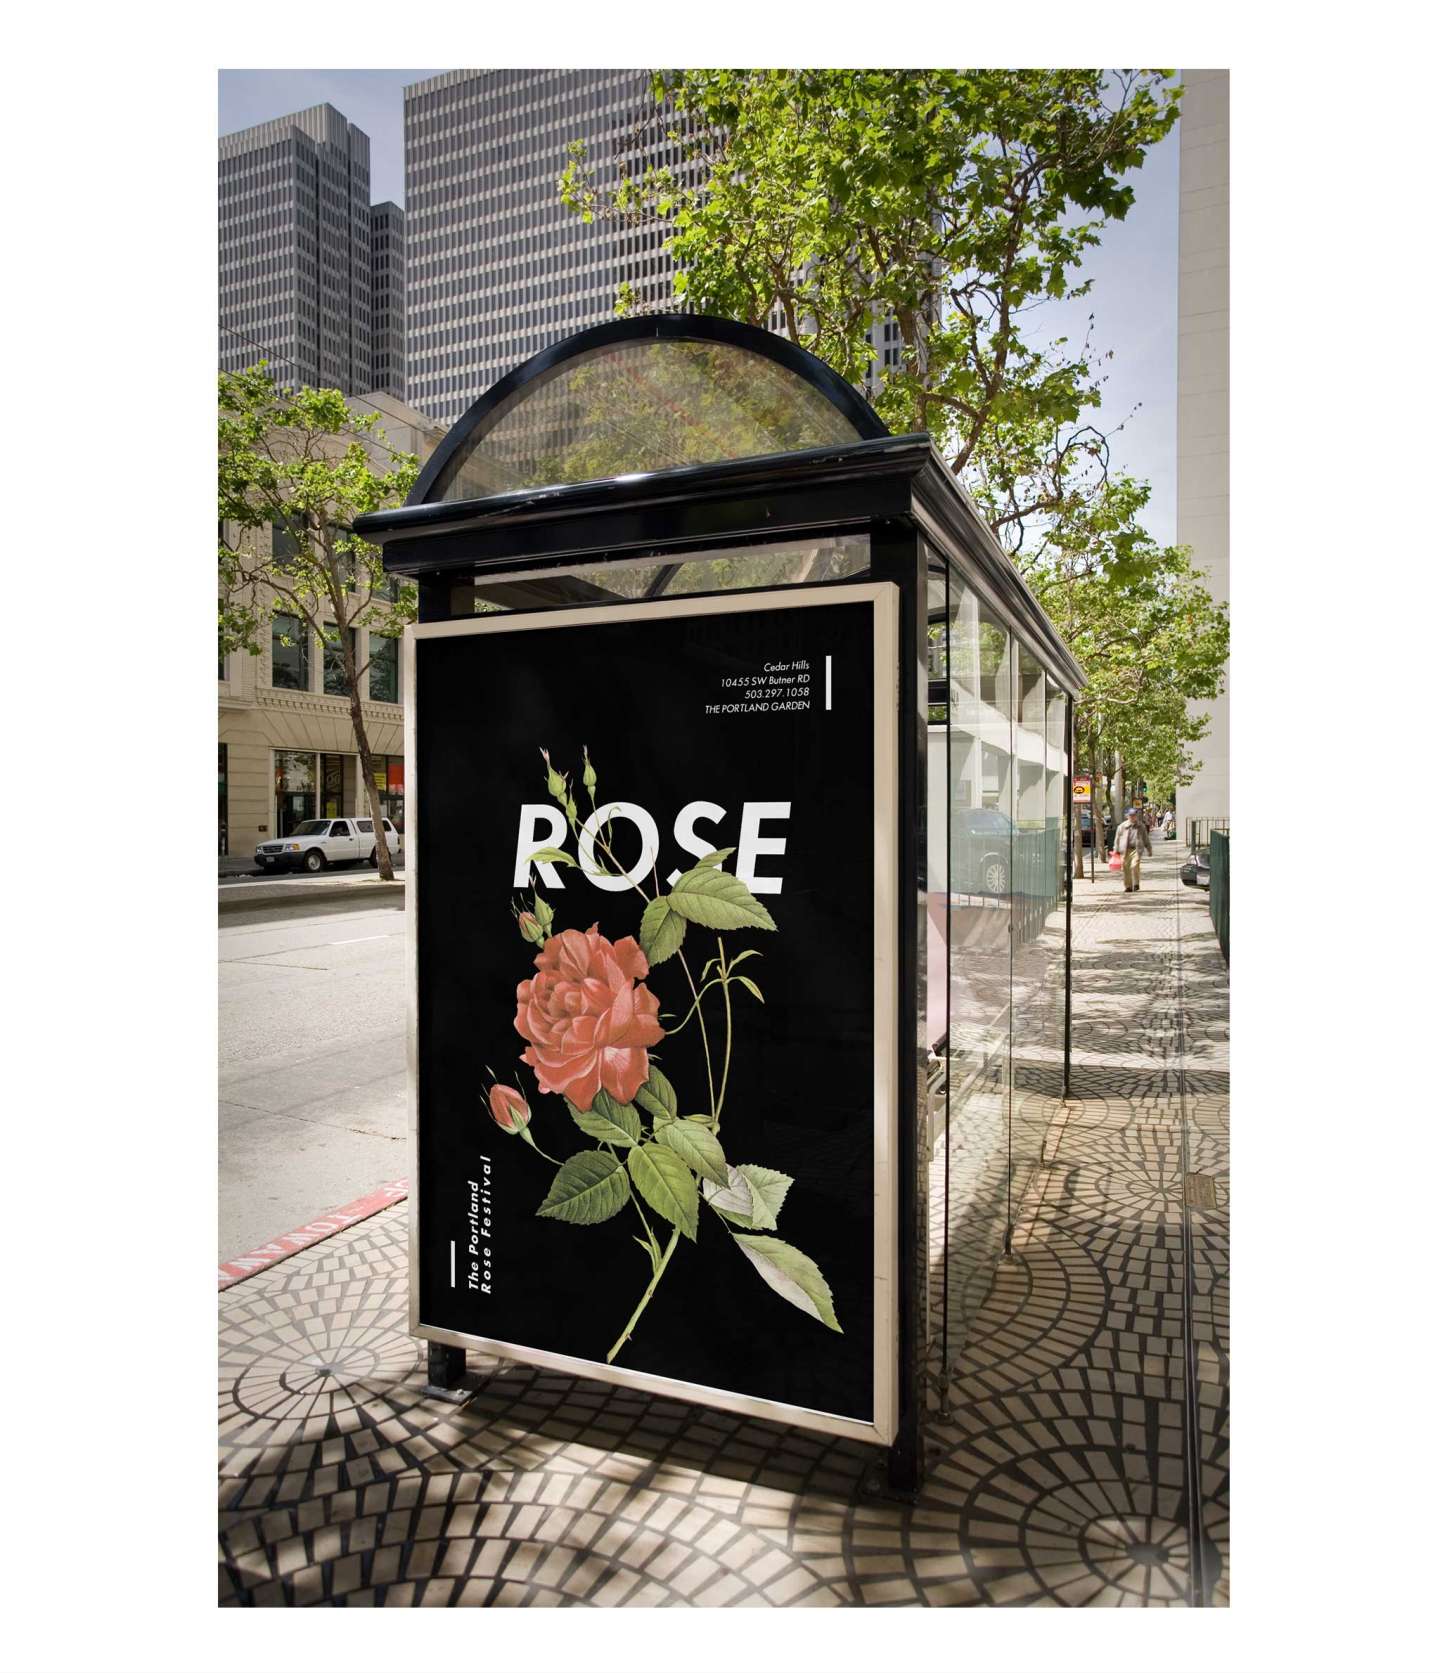 The Portland Rose Festival